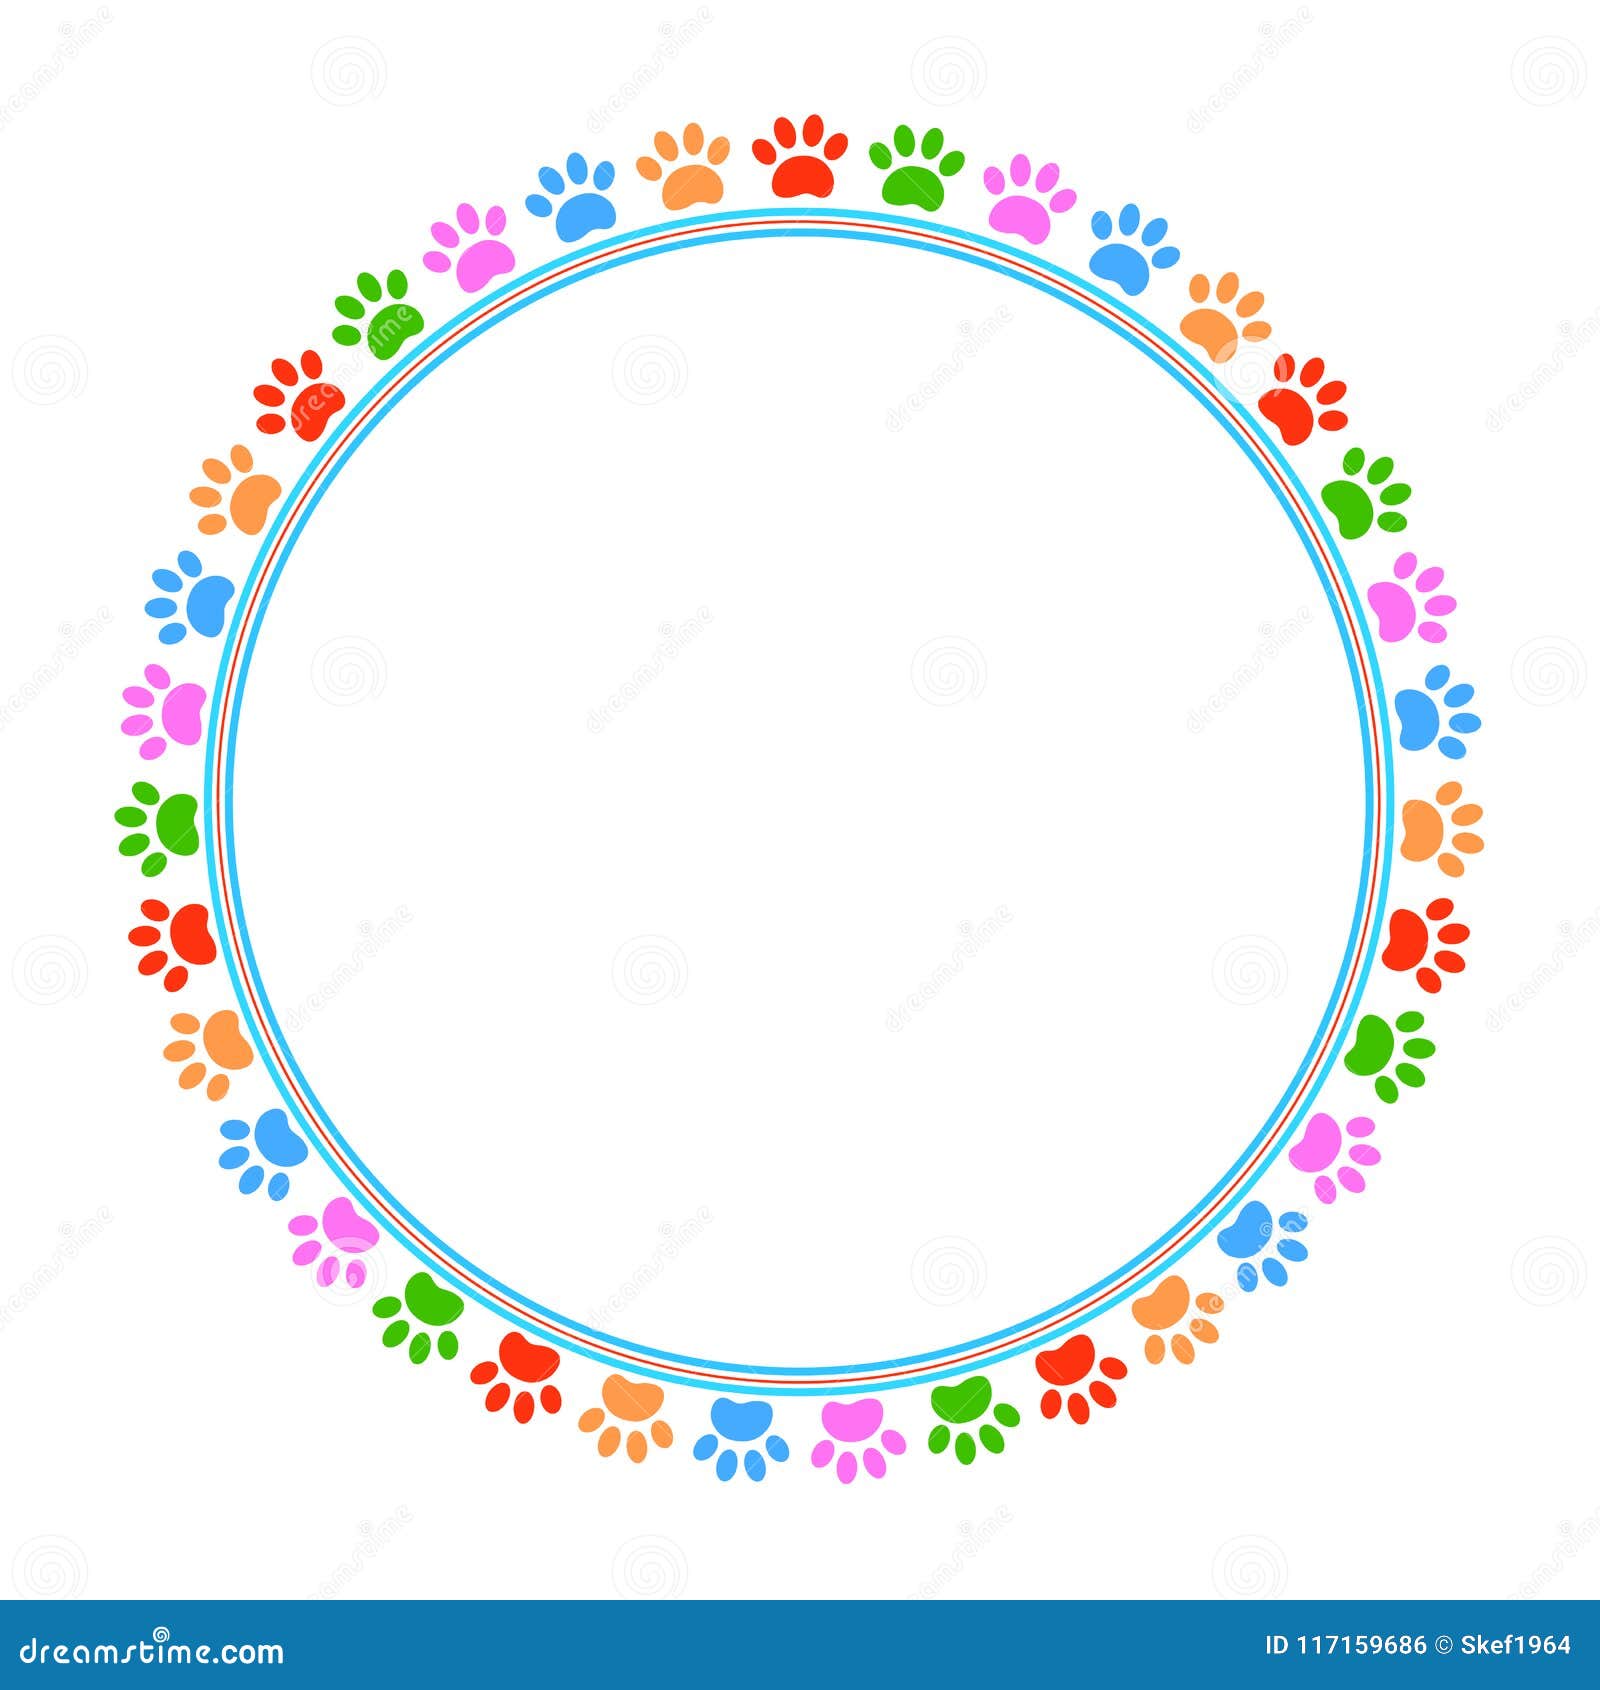 colorful paws animal round frame  image